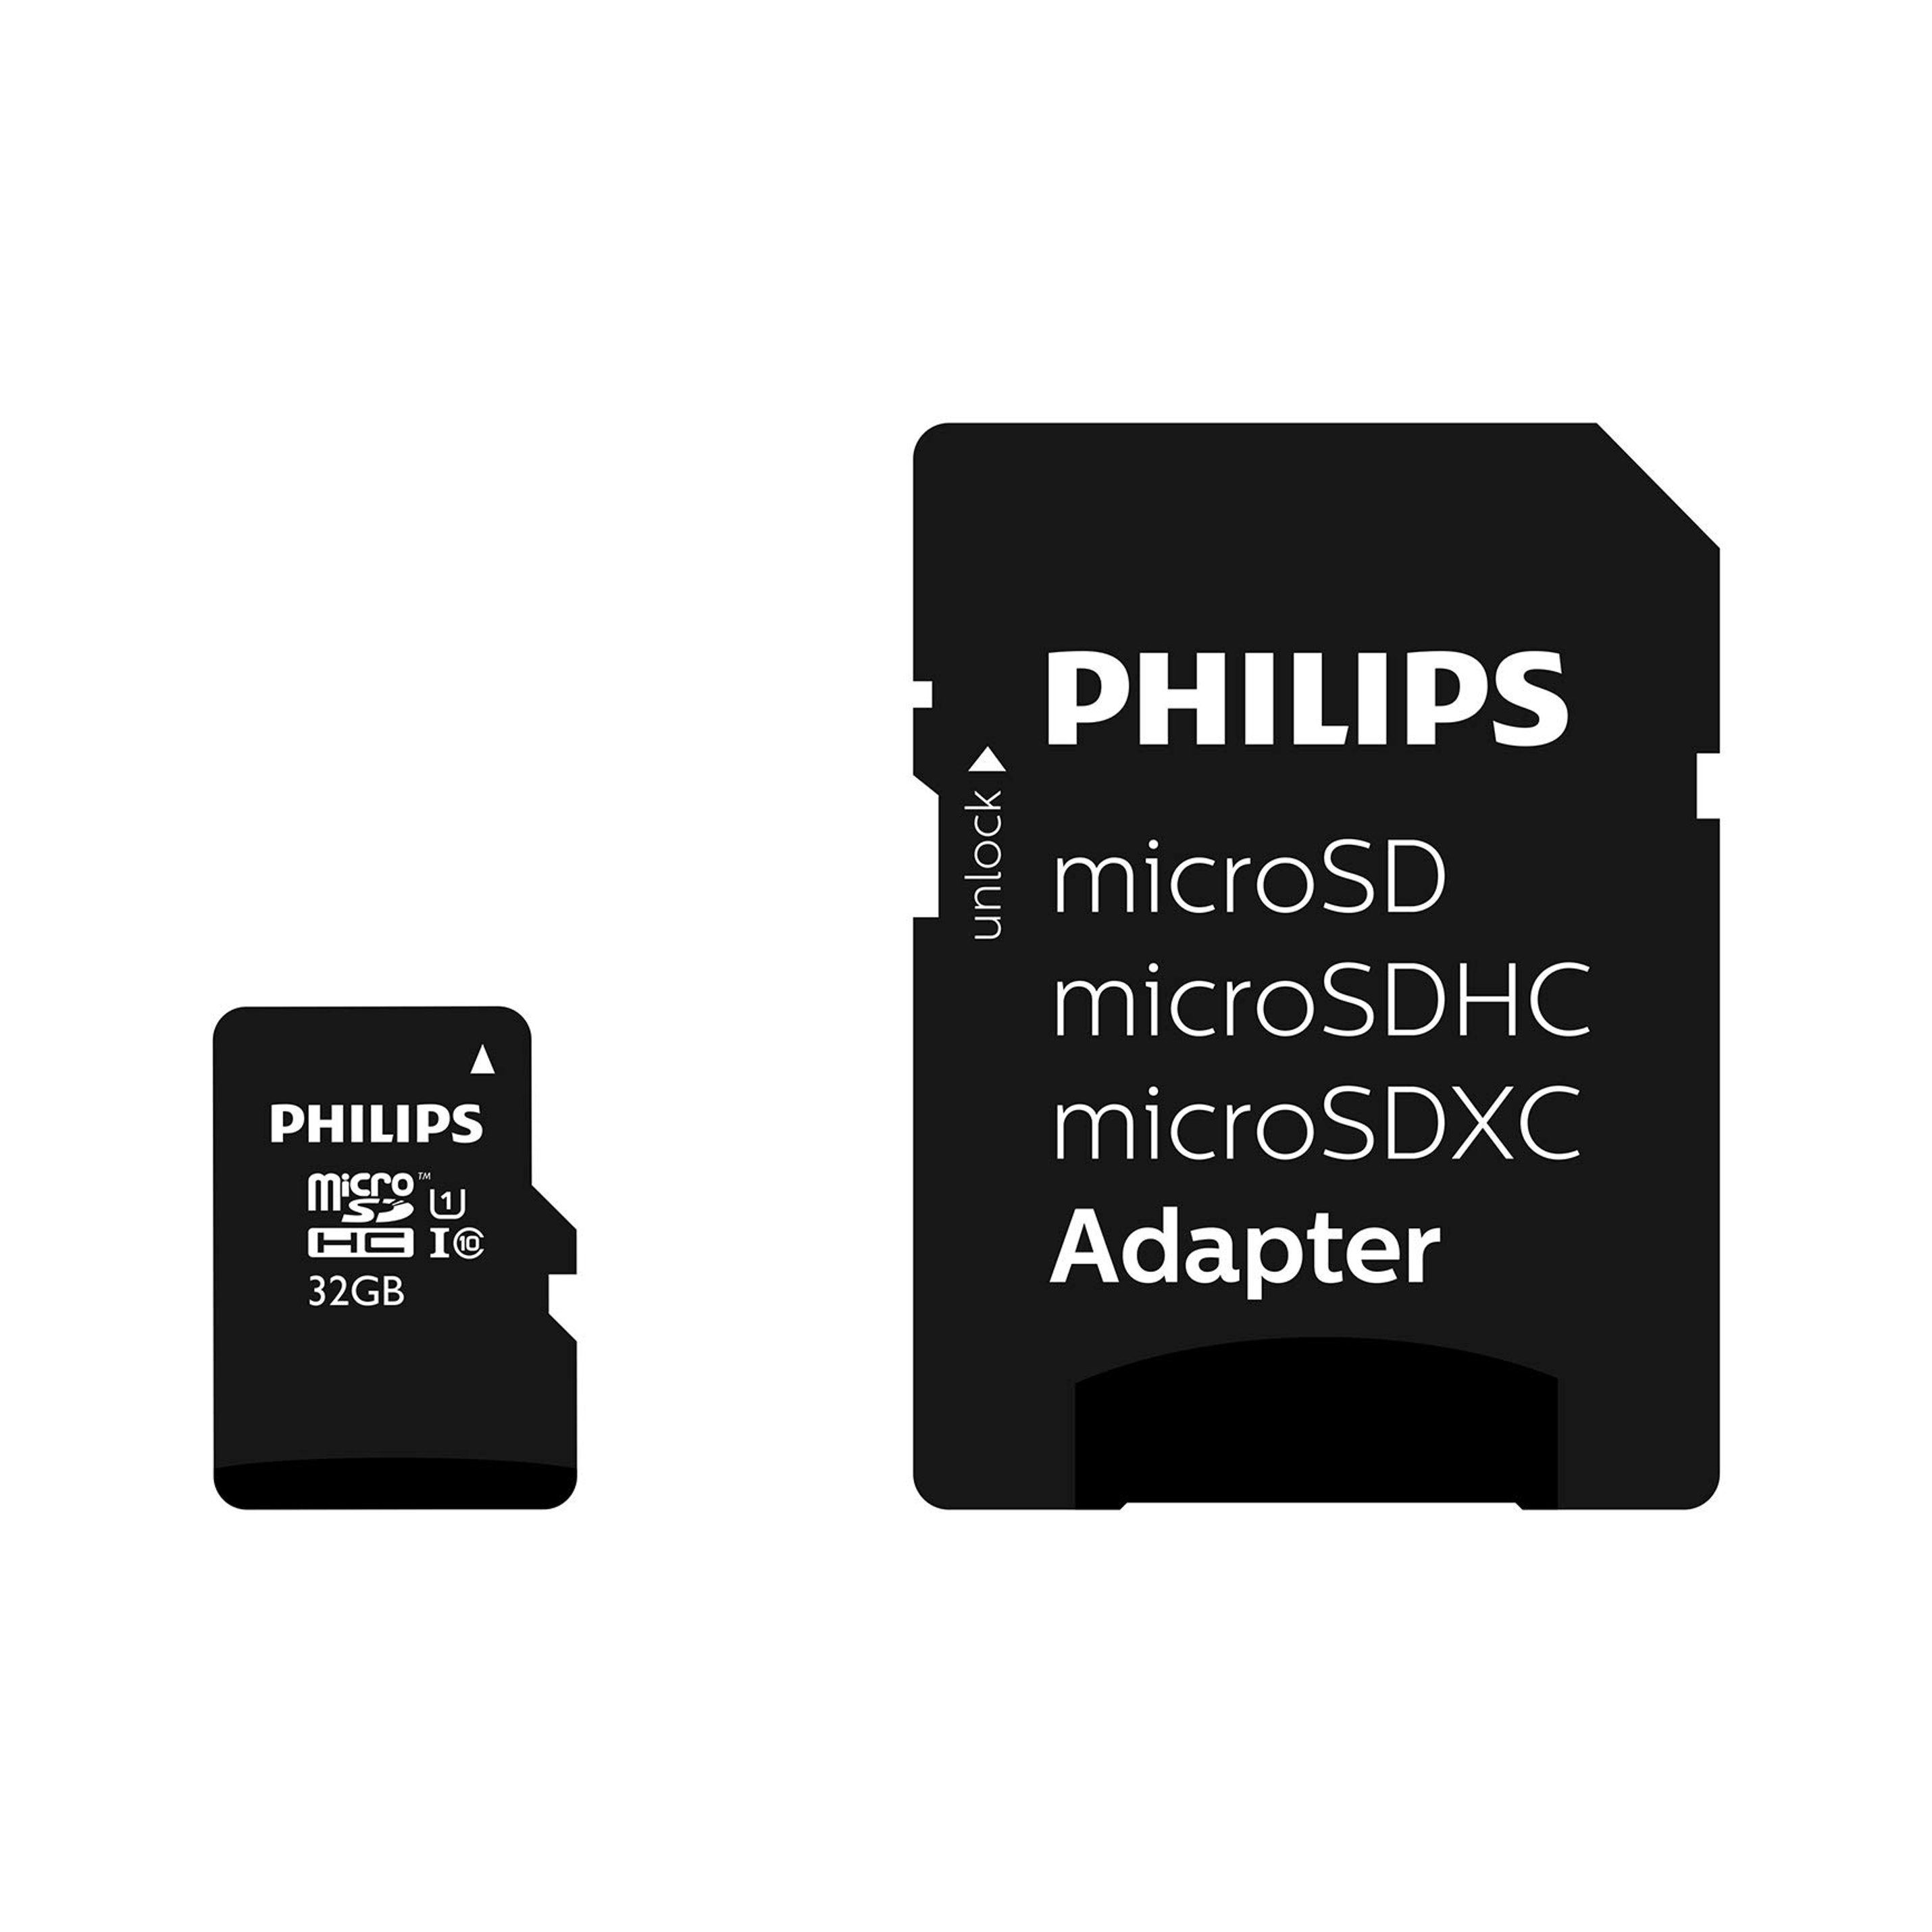 GB, Mbit/s 10, Speicherkarte, 32 80 Adapter, PHILIPS Class UHS-I UI, Micro-SDHC 32 Micro-SDHC